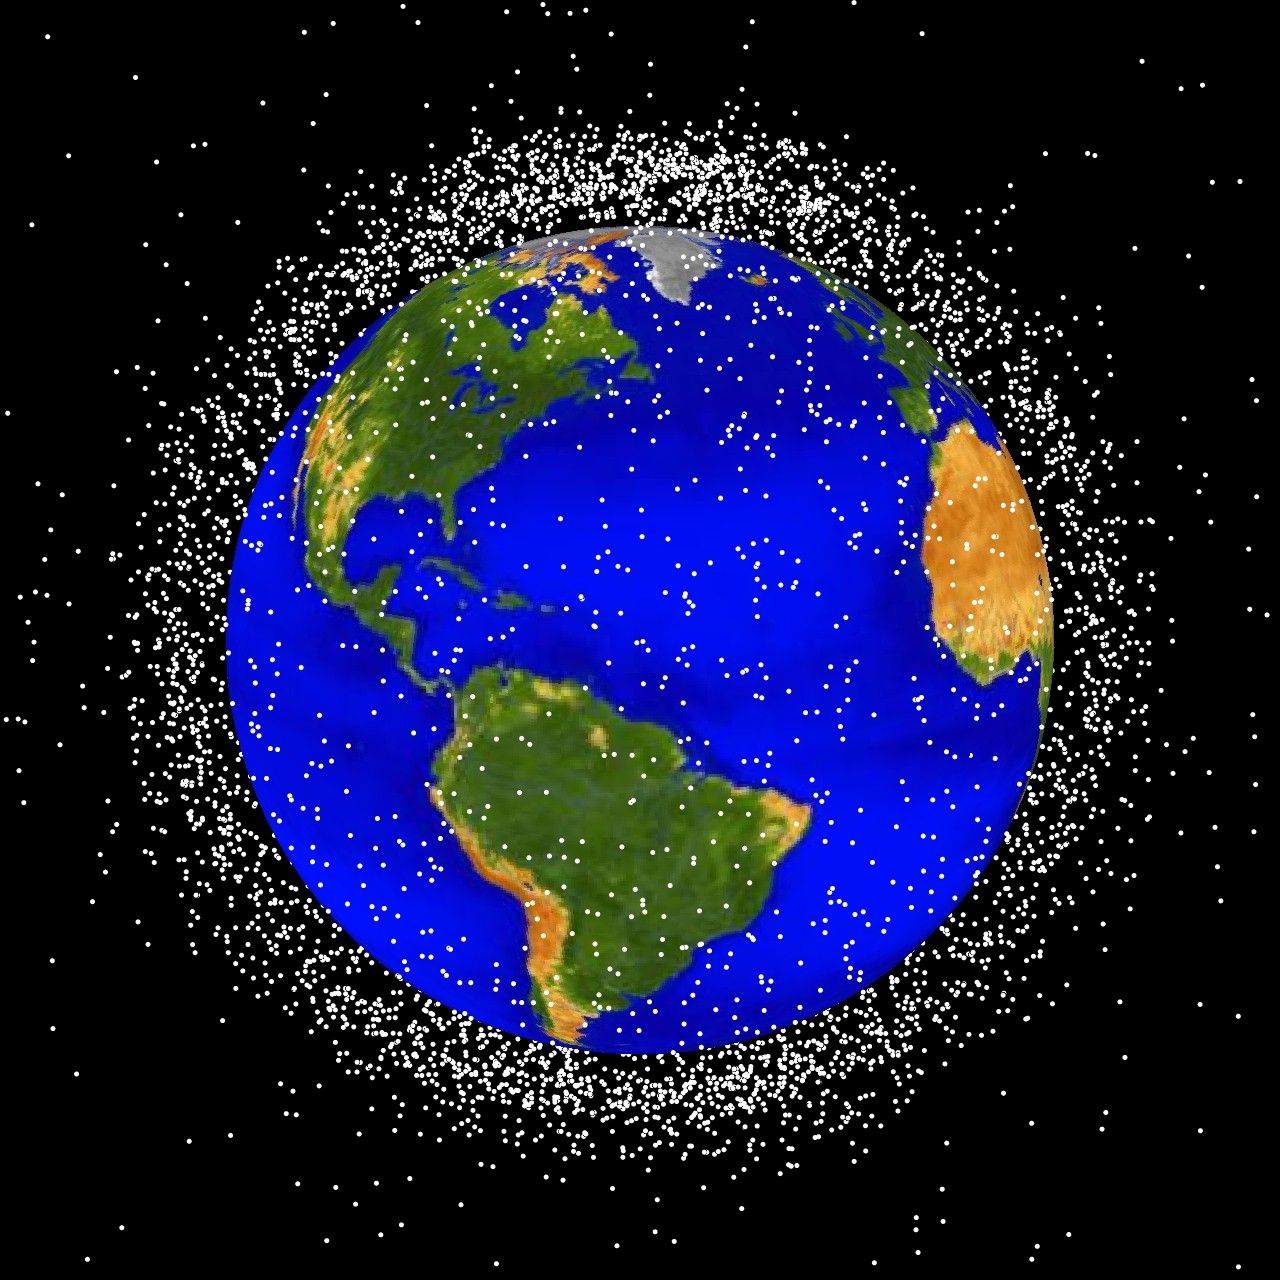 Distribution of debris going around orbit less than an altitude of 2,000km